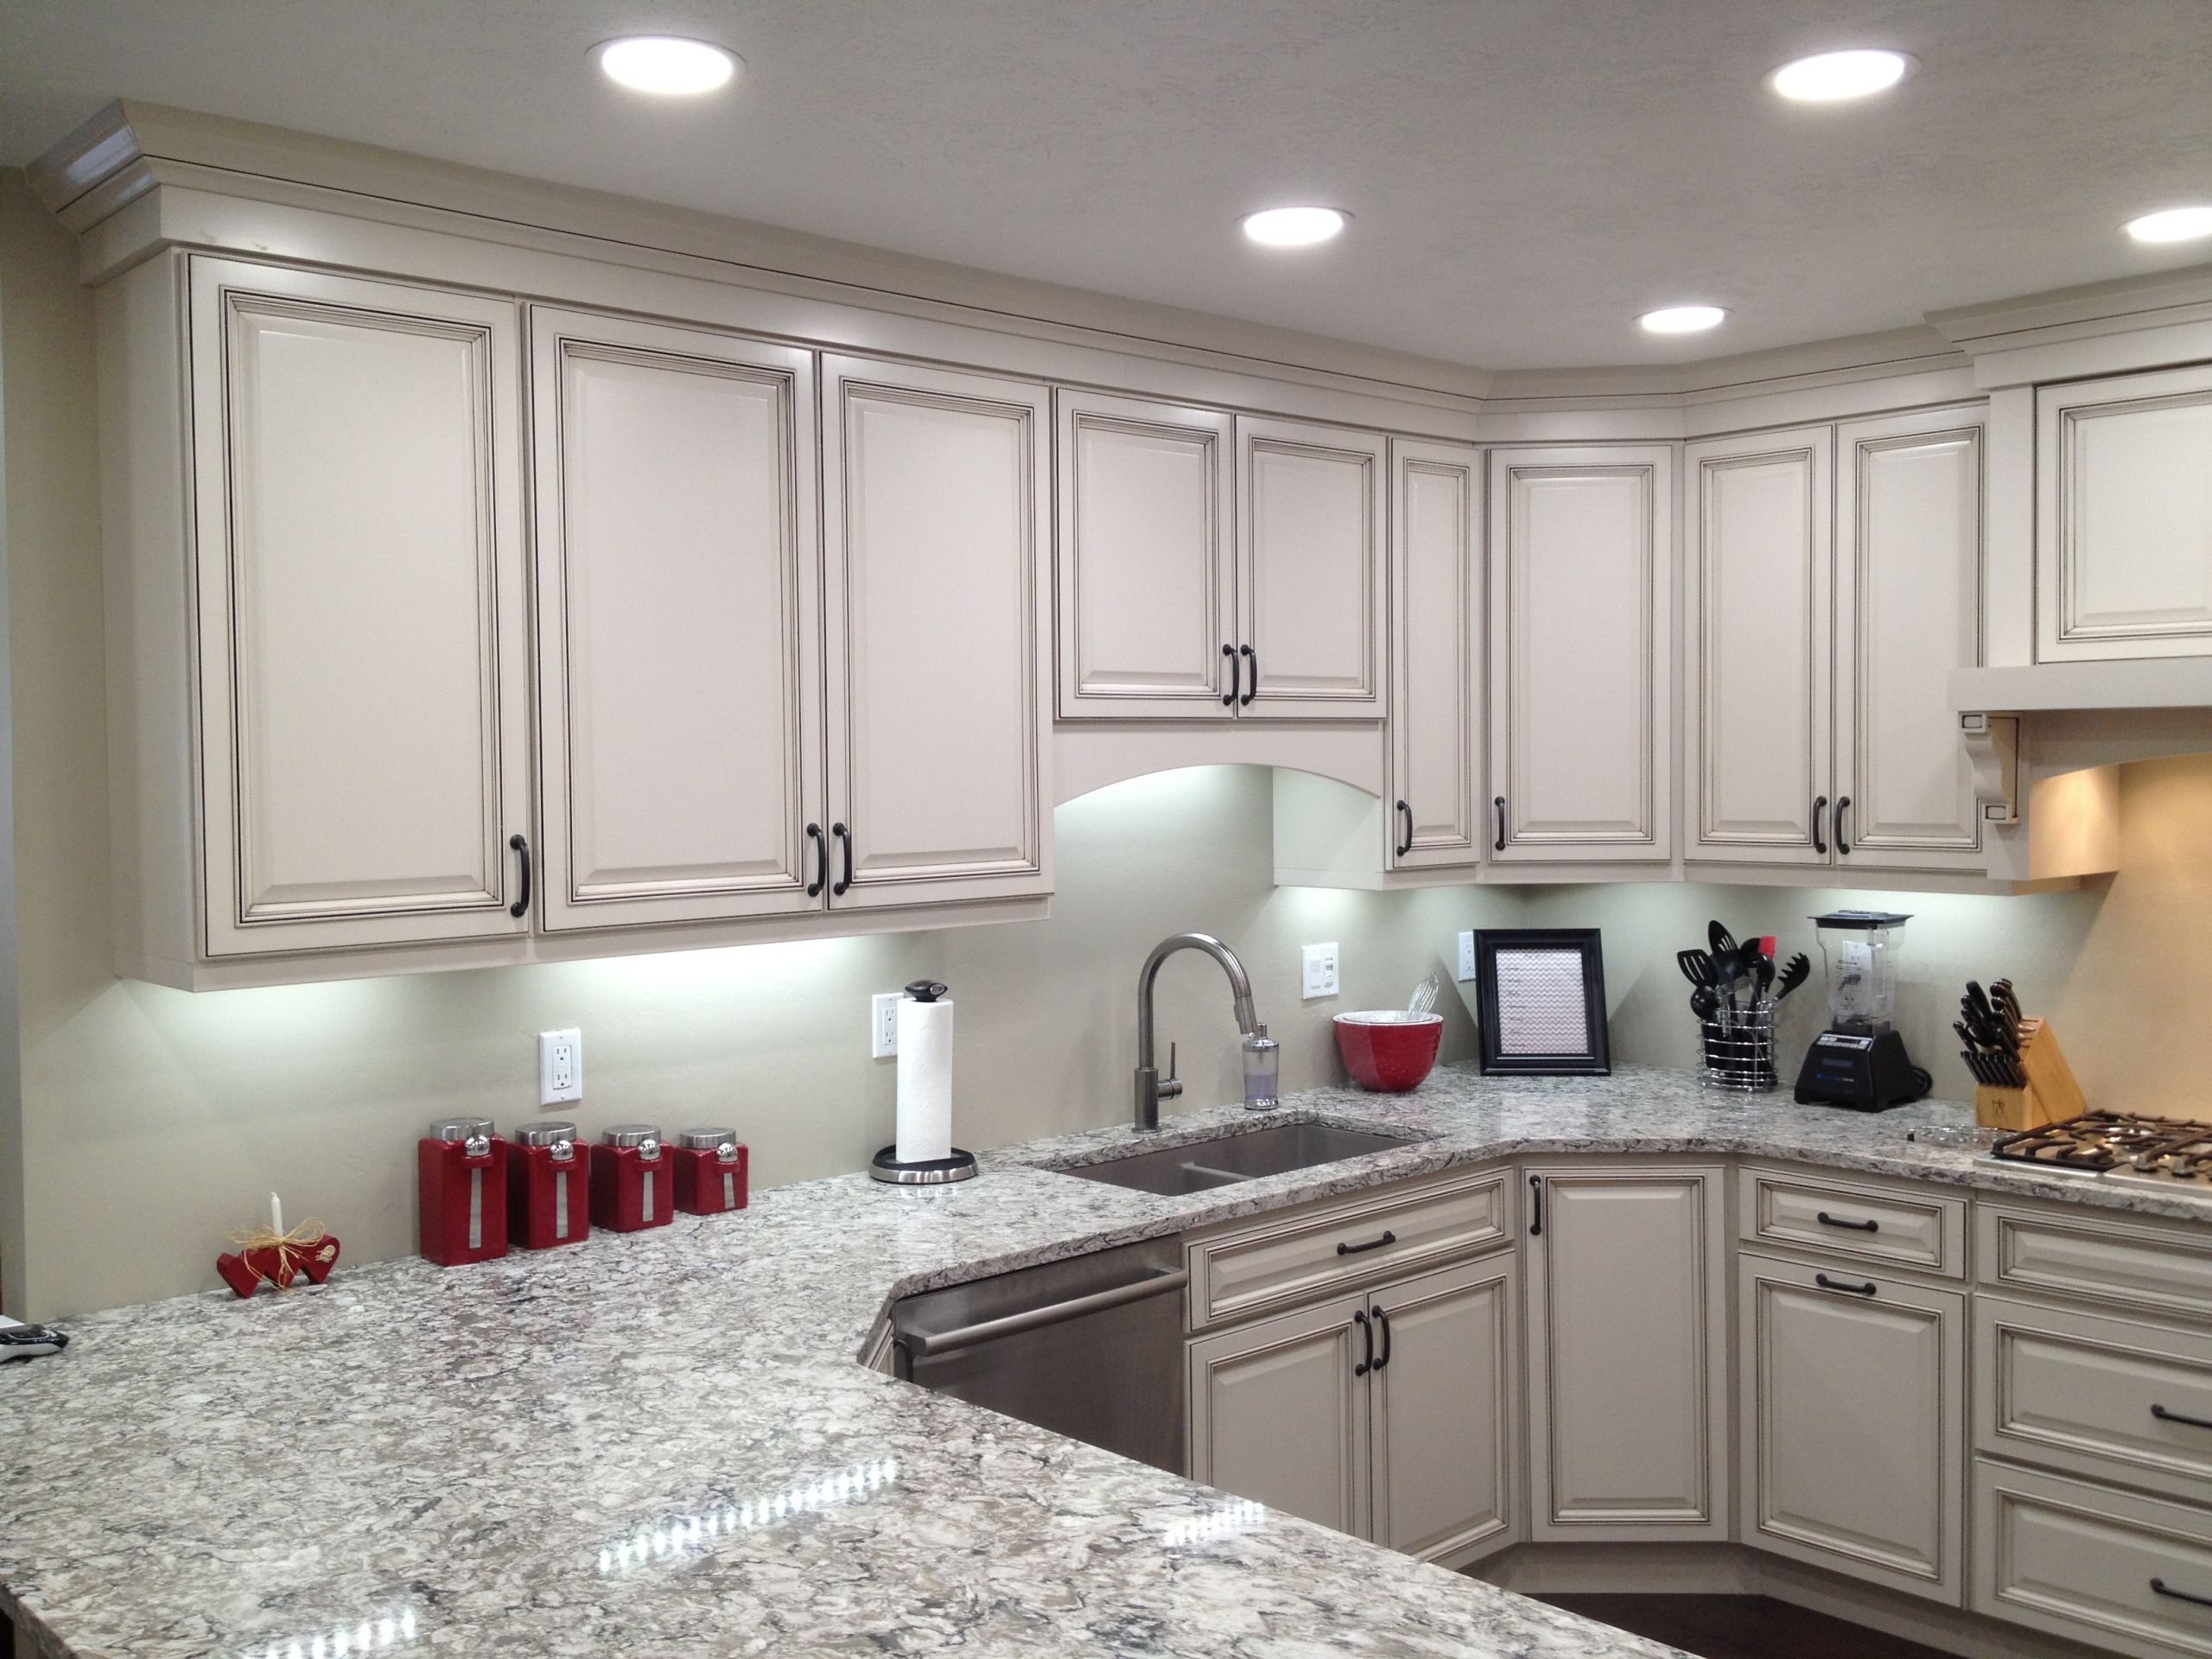 Led Lighting Under Cabinet Kitchen
 Look to LEDs when Upgrading Lighting